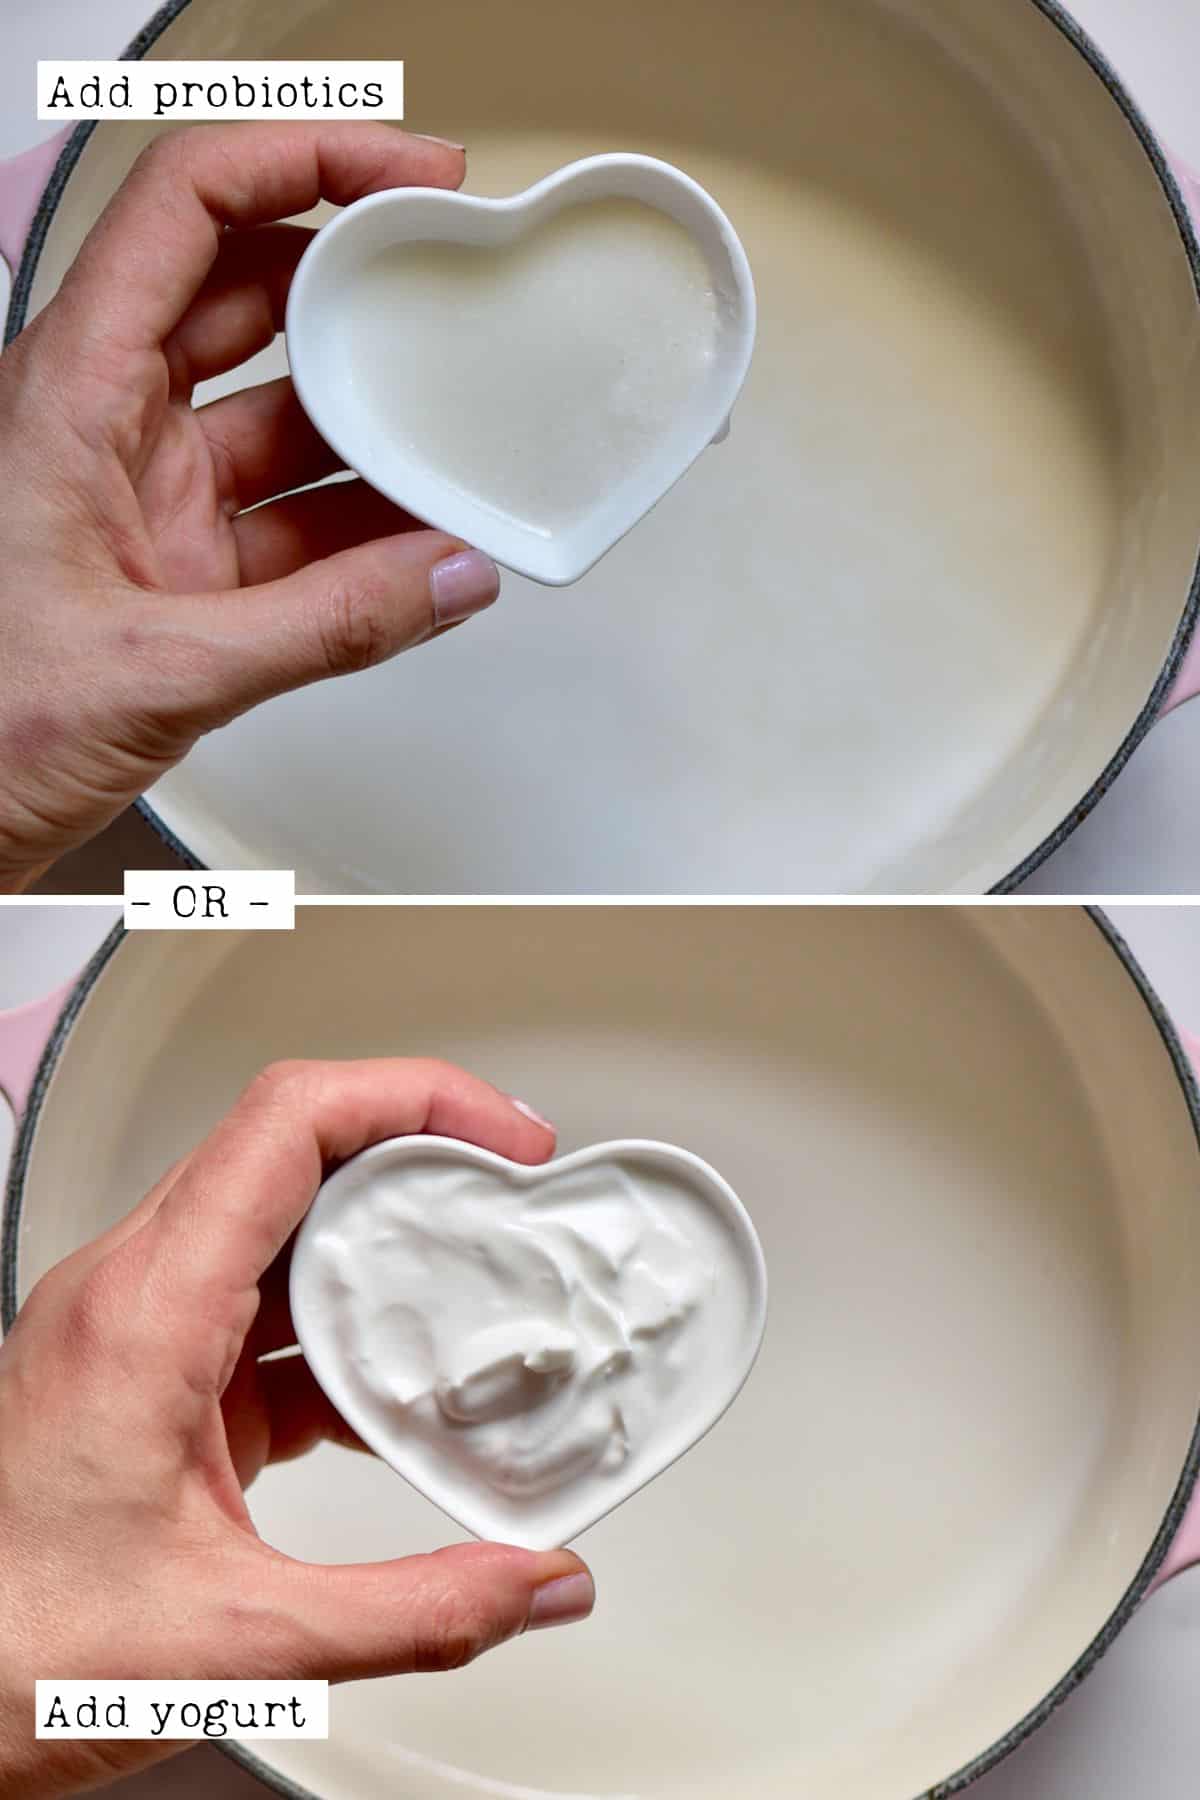 Steps for adding yogurt starter to coconut milk